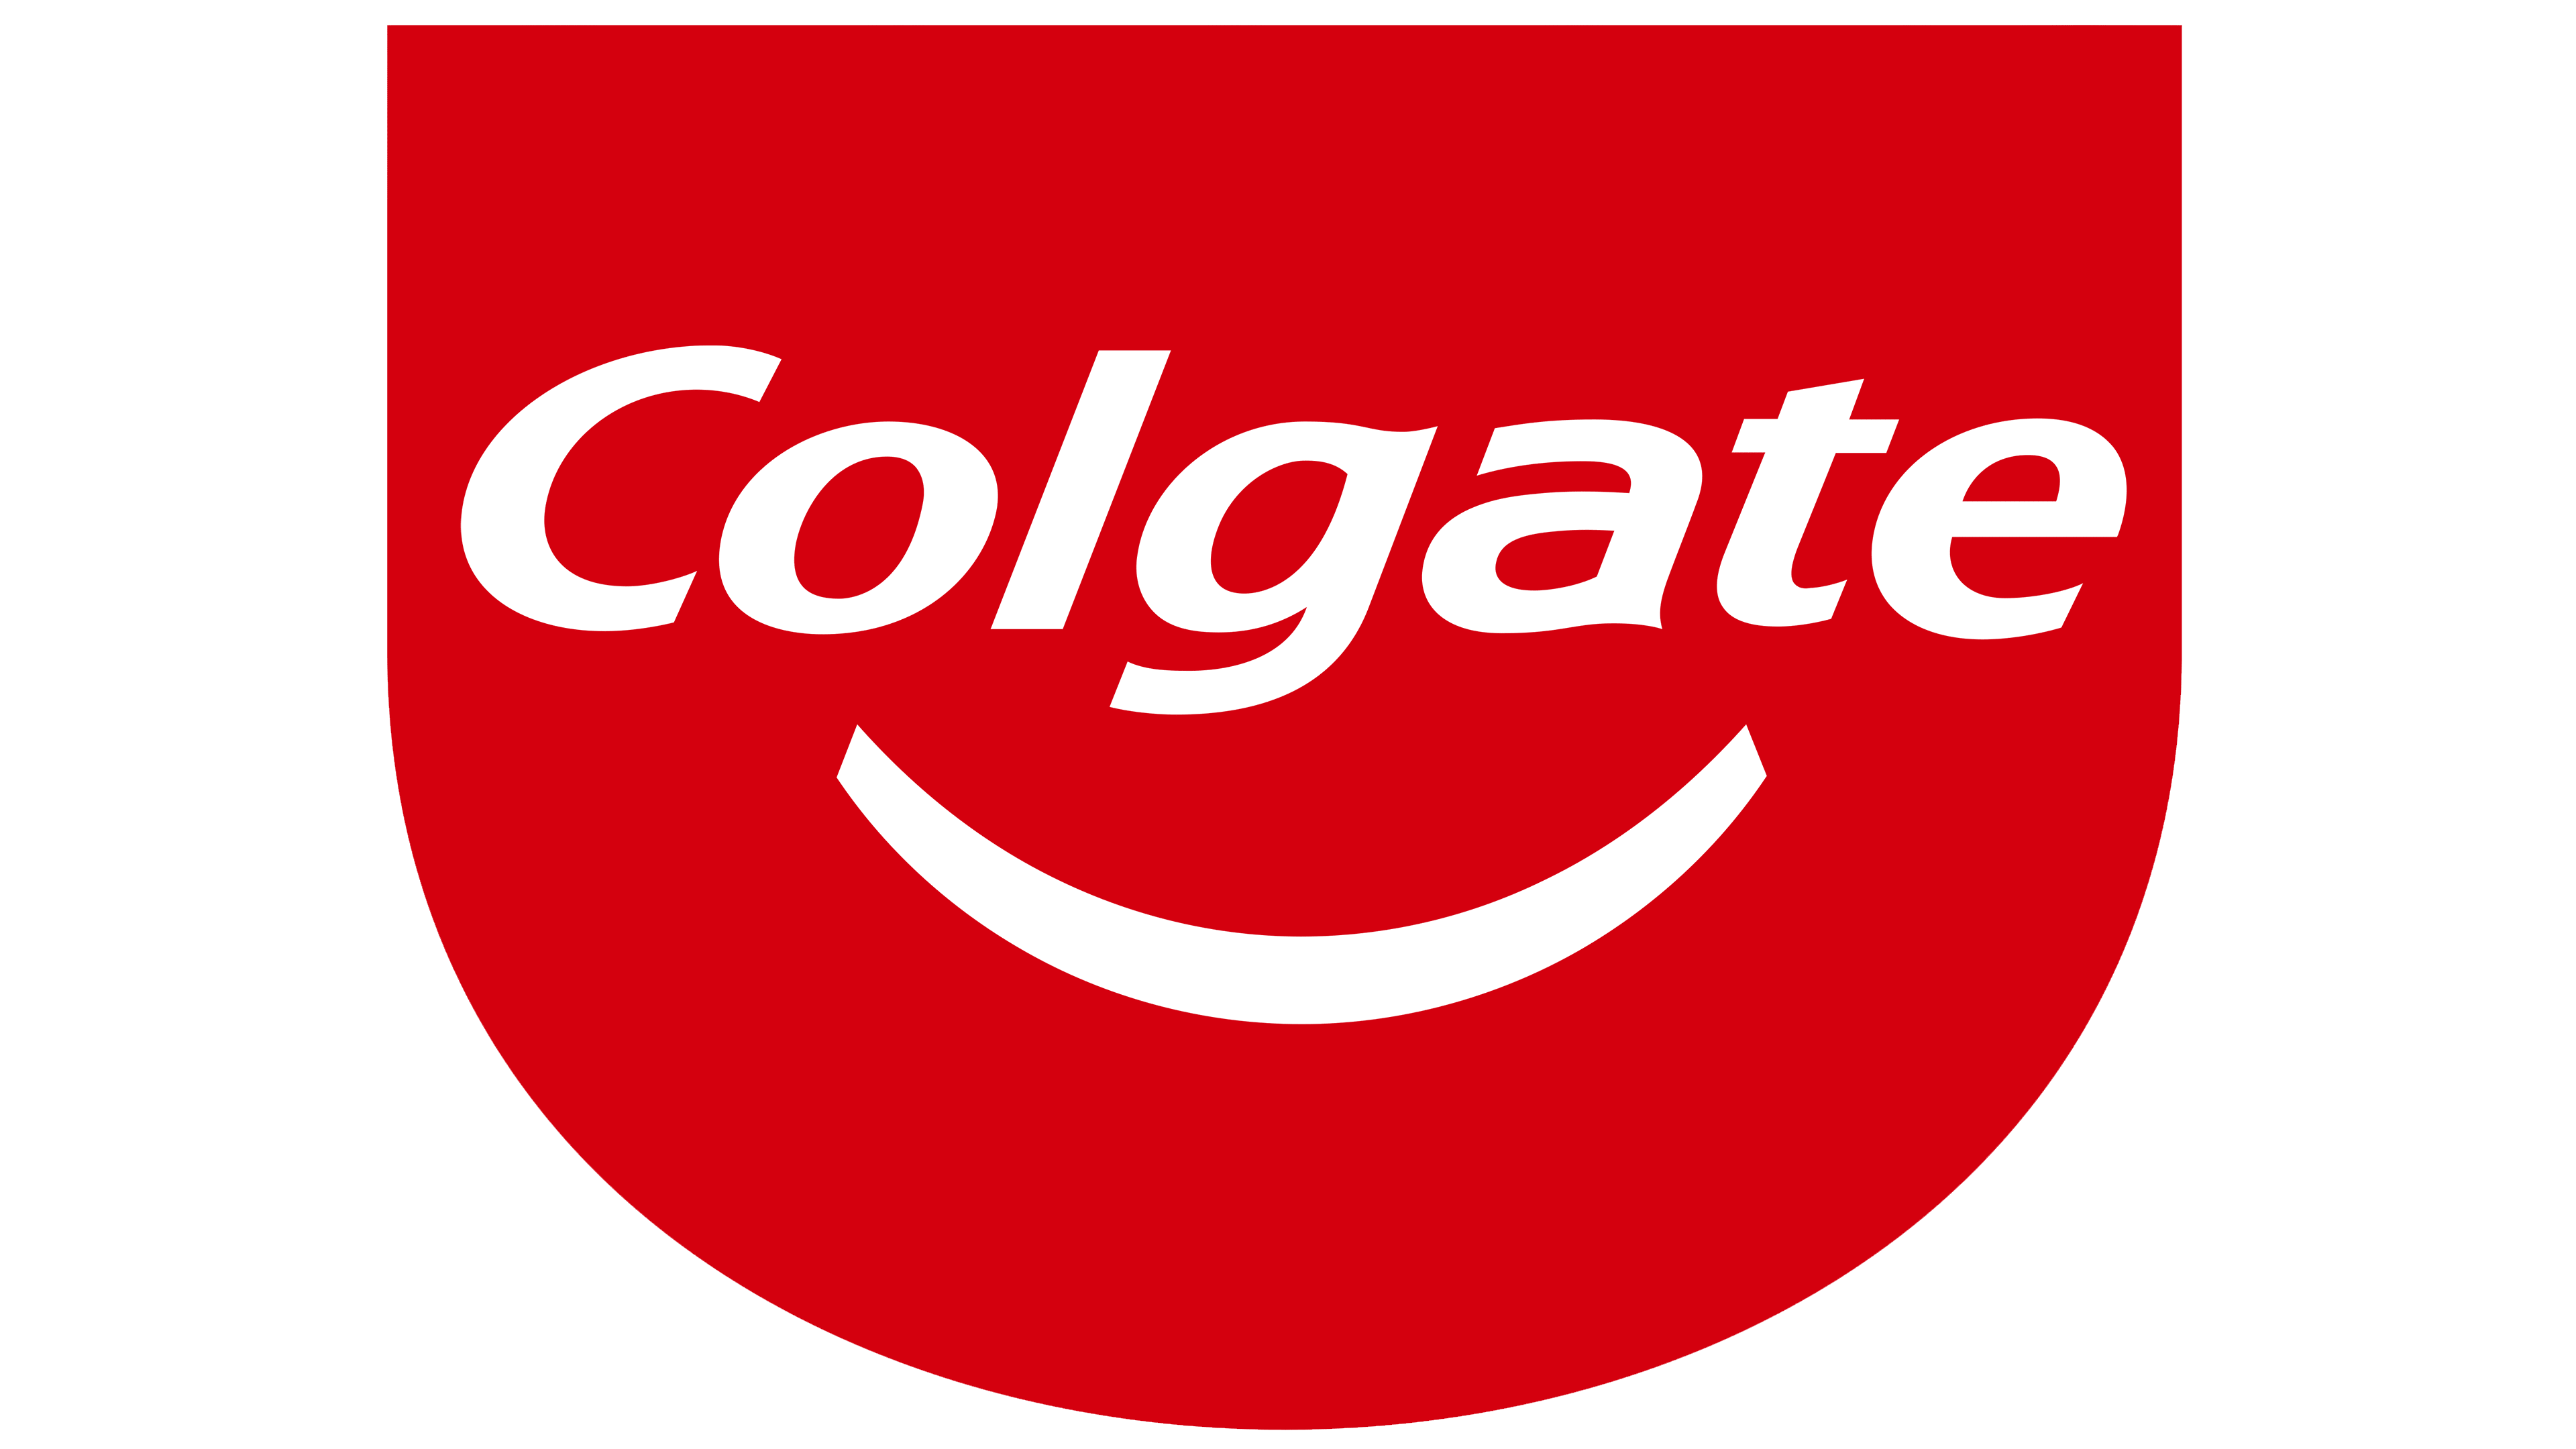 colgate logo 다운로드 투명 PNG 이미지를 다운로드합니다